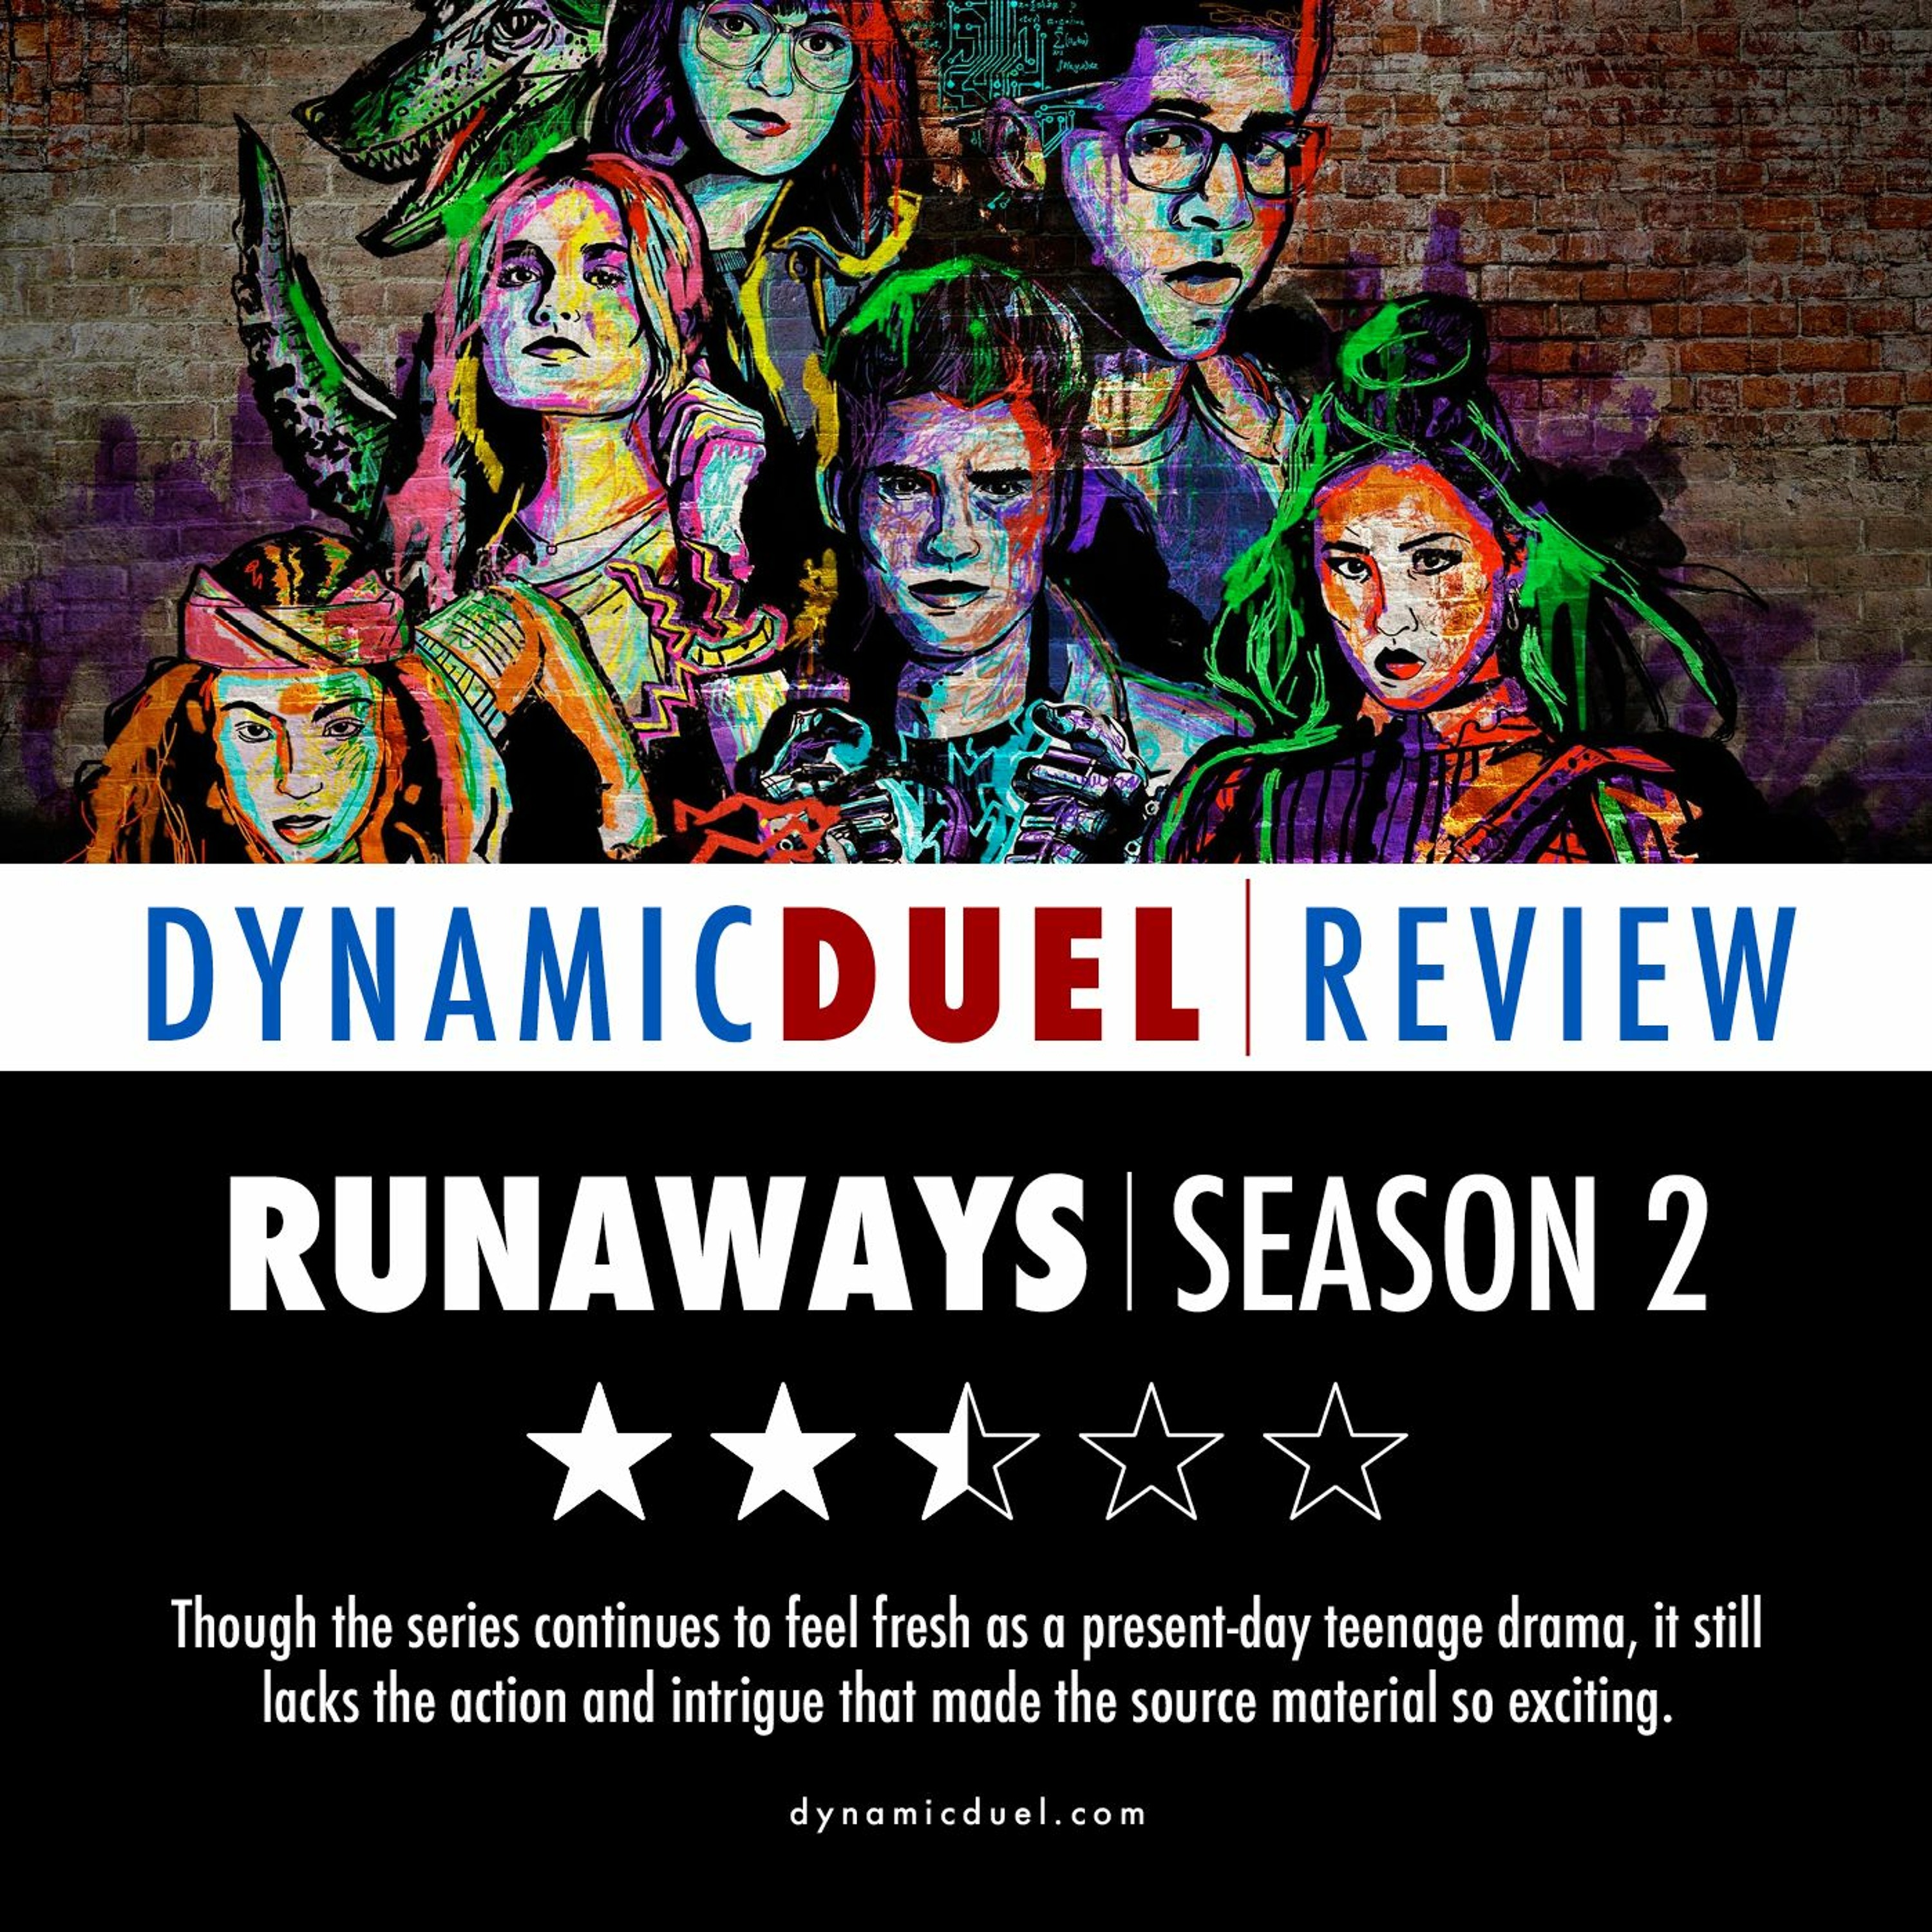 Runaways Season 2 Review Image